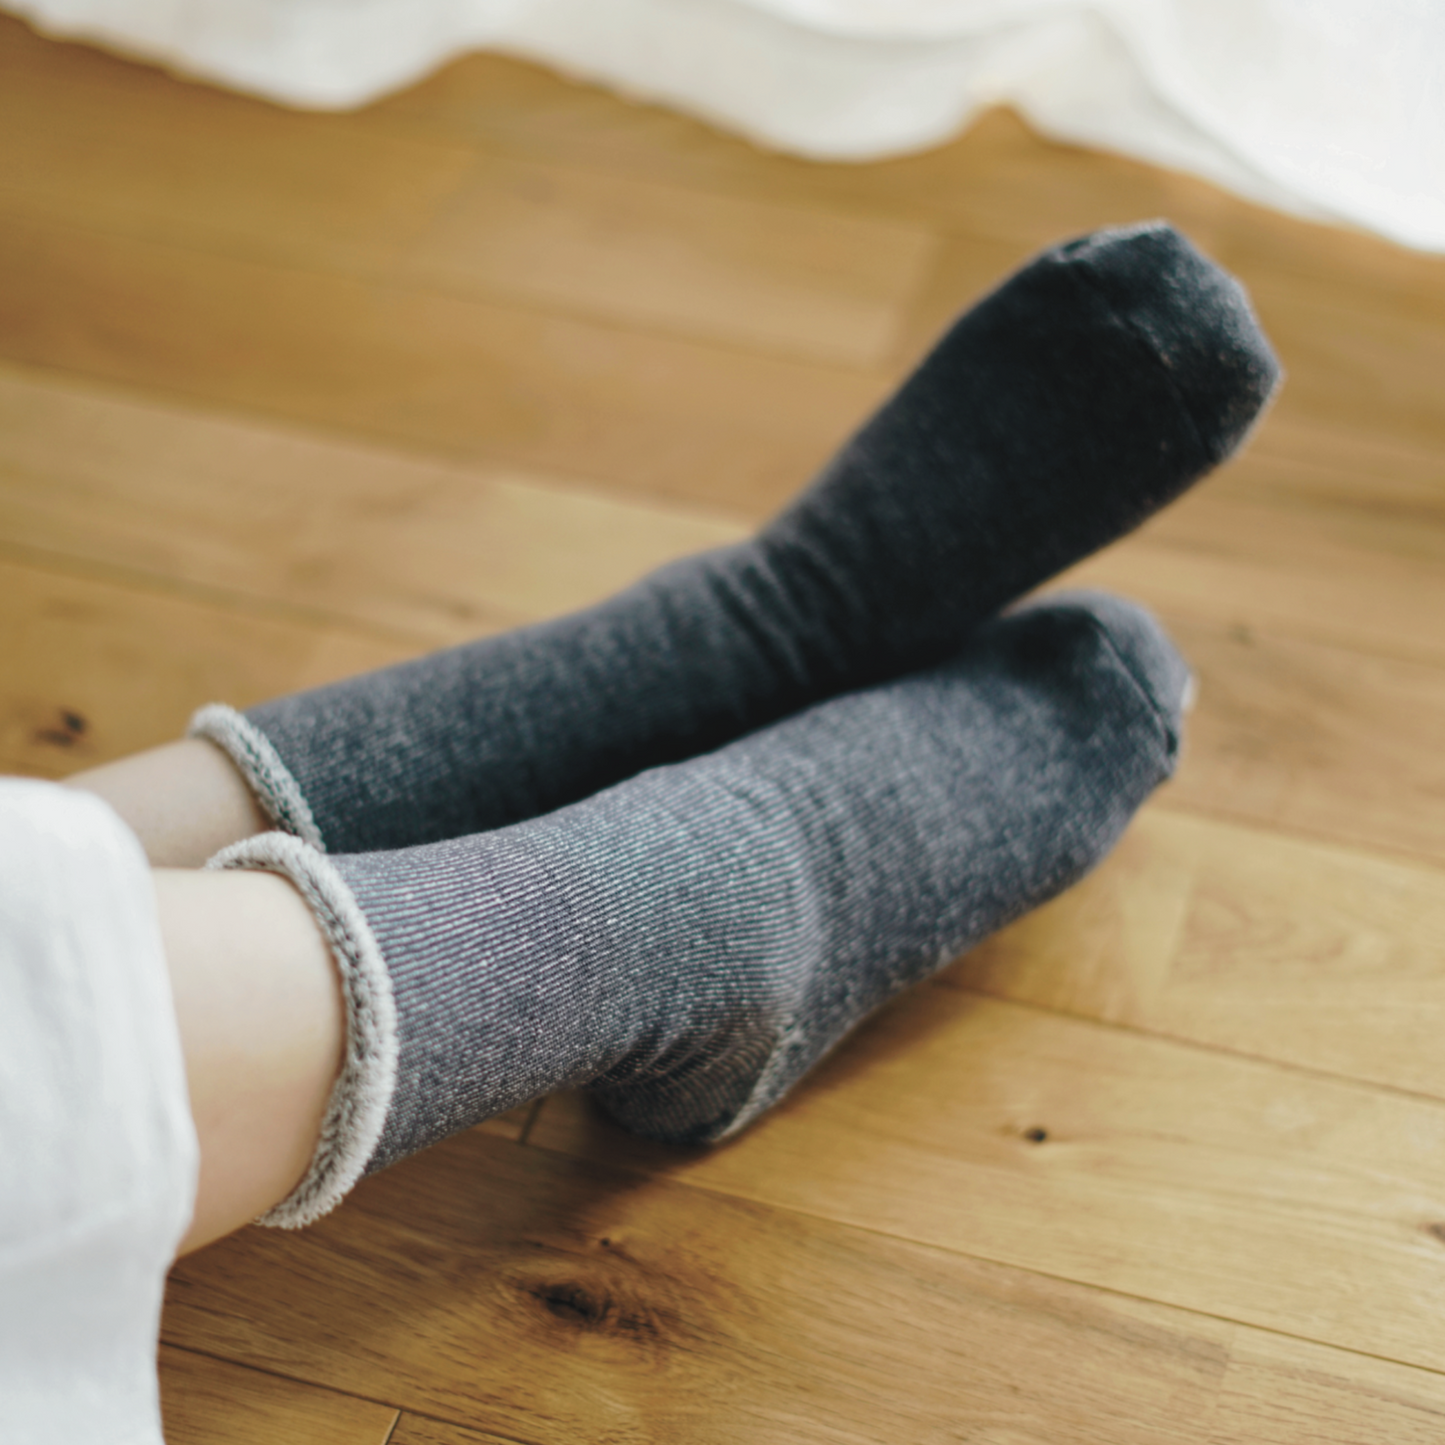 Praha Silk Cotton Socks Charcoal Small | Nishiguchi Kutsushita | Miss Arthur | Home Goods | Tasmania